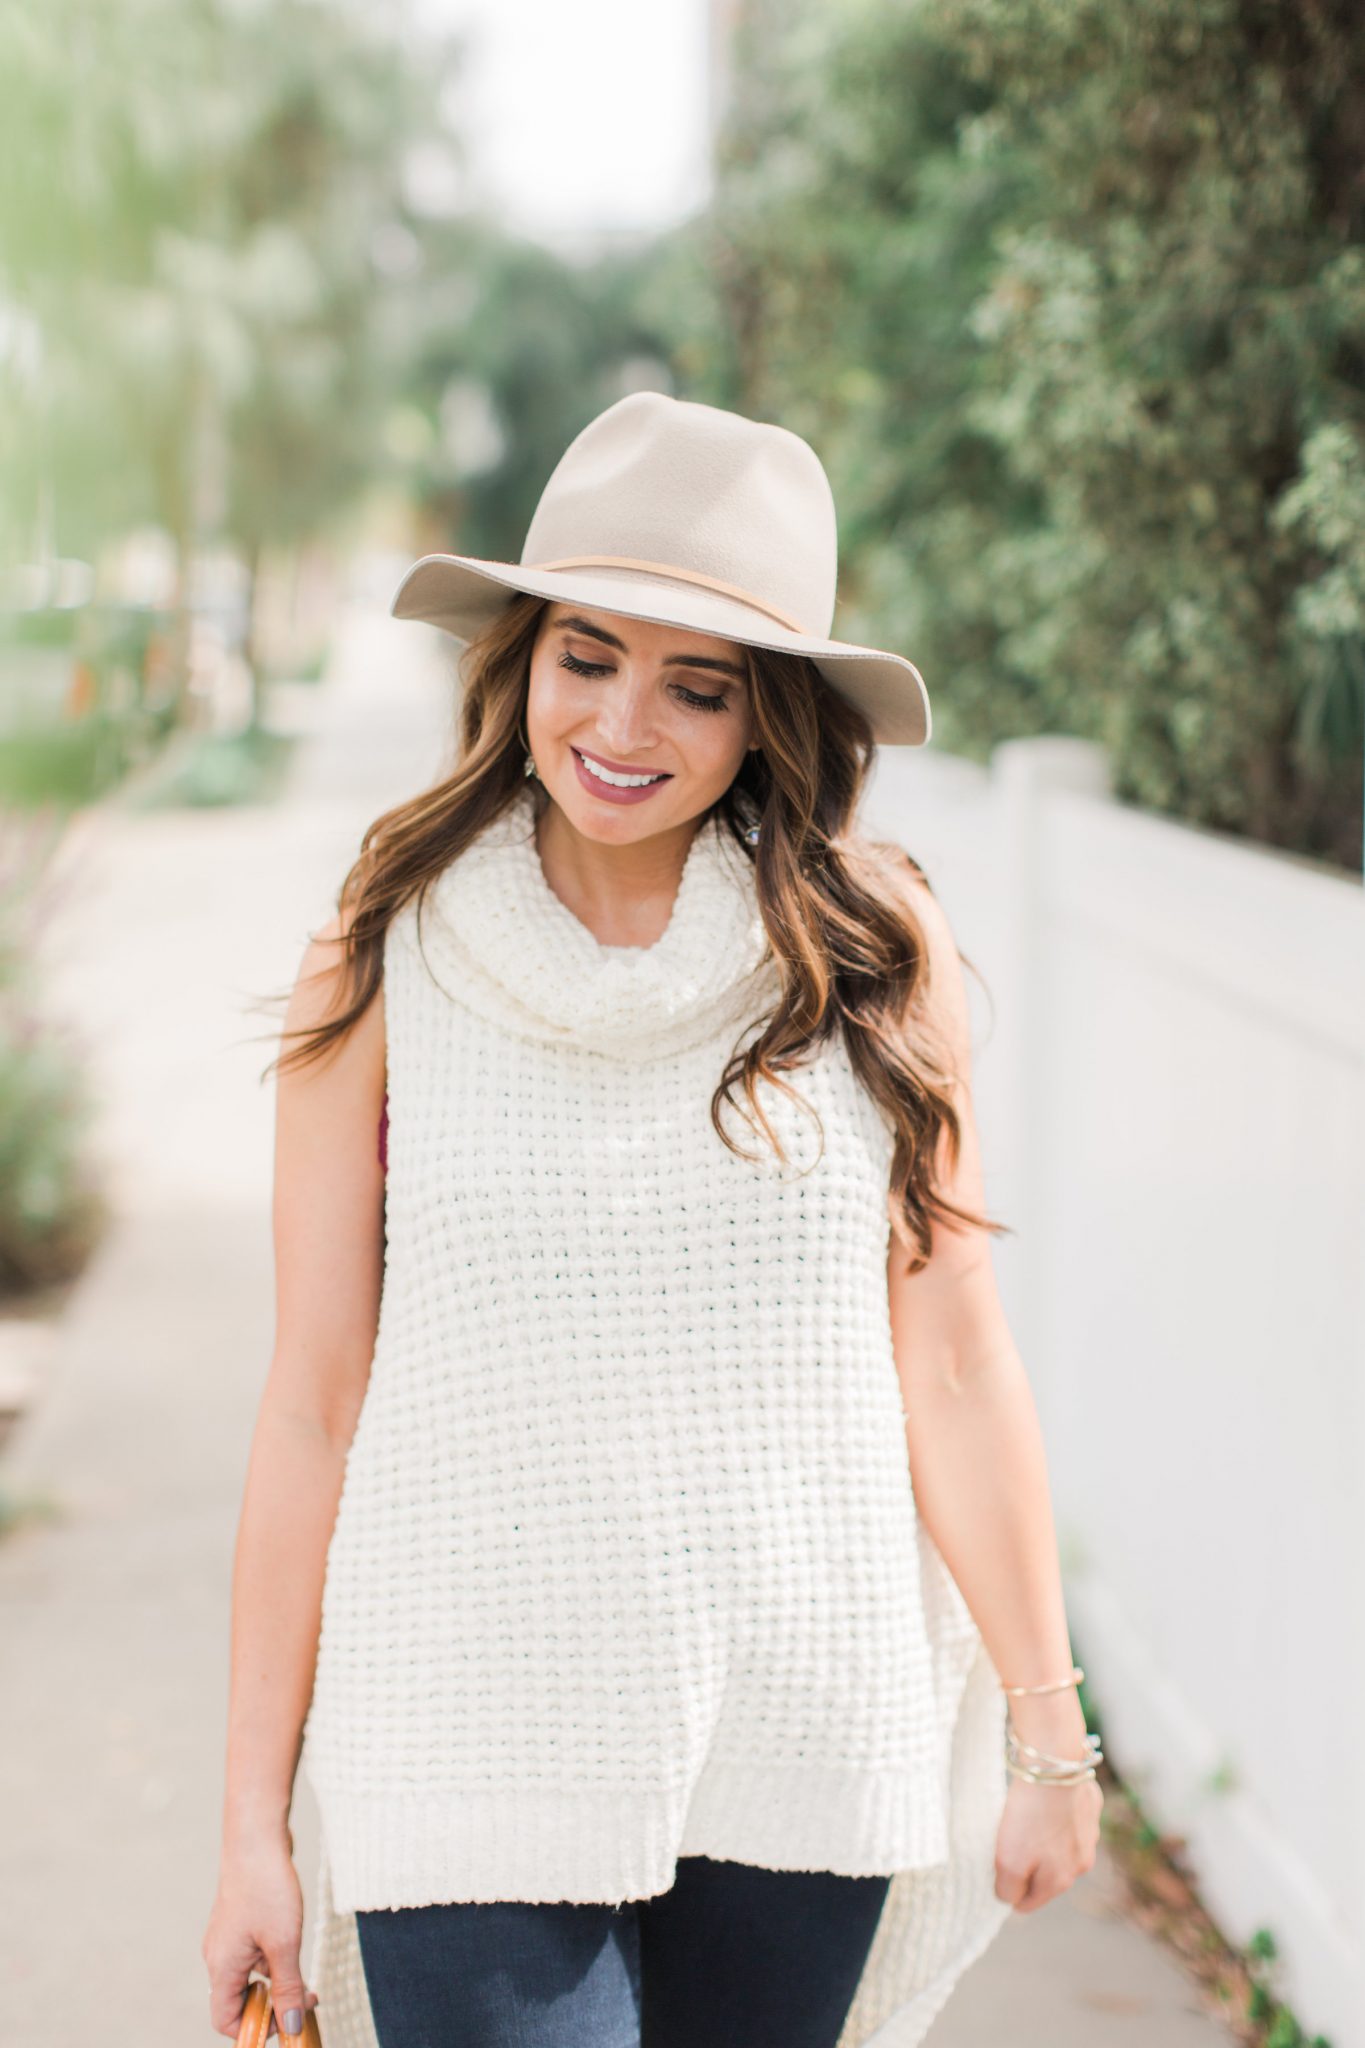 Fall Style - sleeveless turtleneck, distressed denim, tan hat | Maxie Elle - Fall Layering Top by popular Orange County fashion blogger Maxie Elle